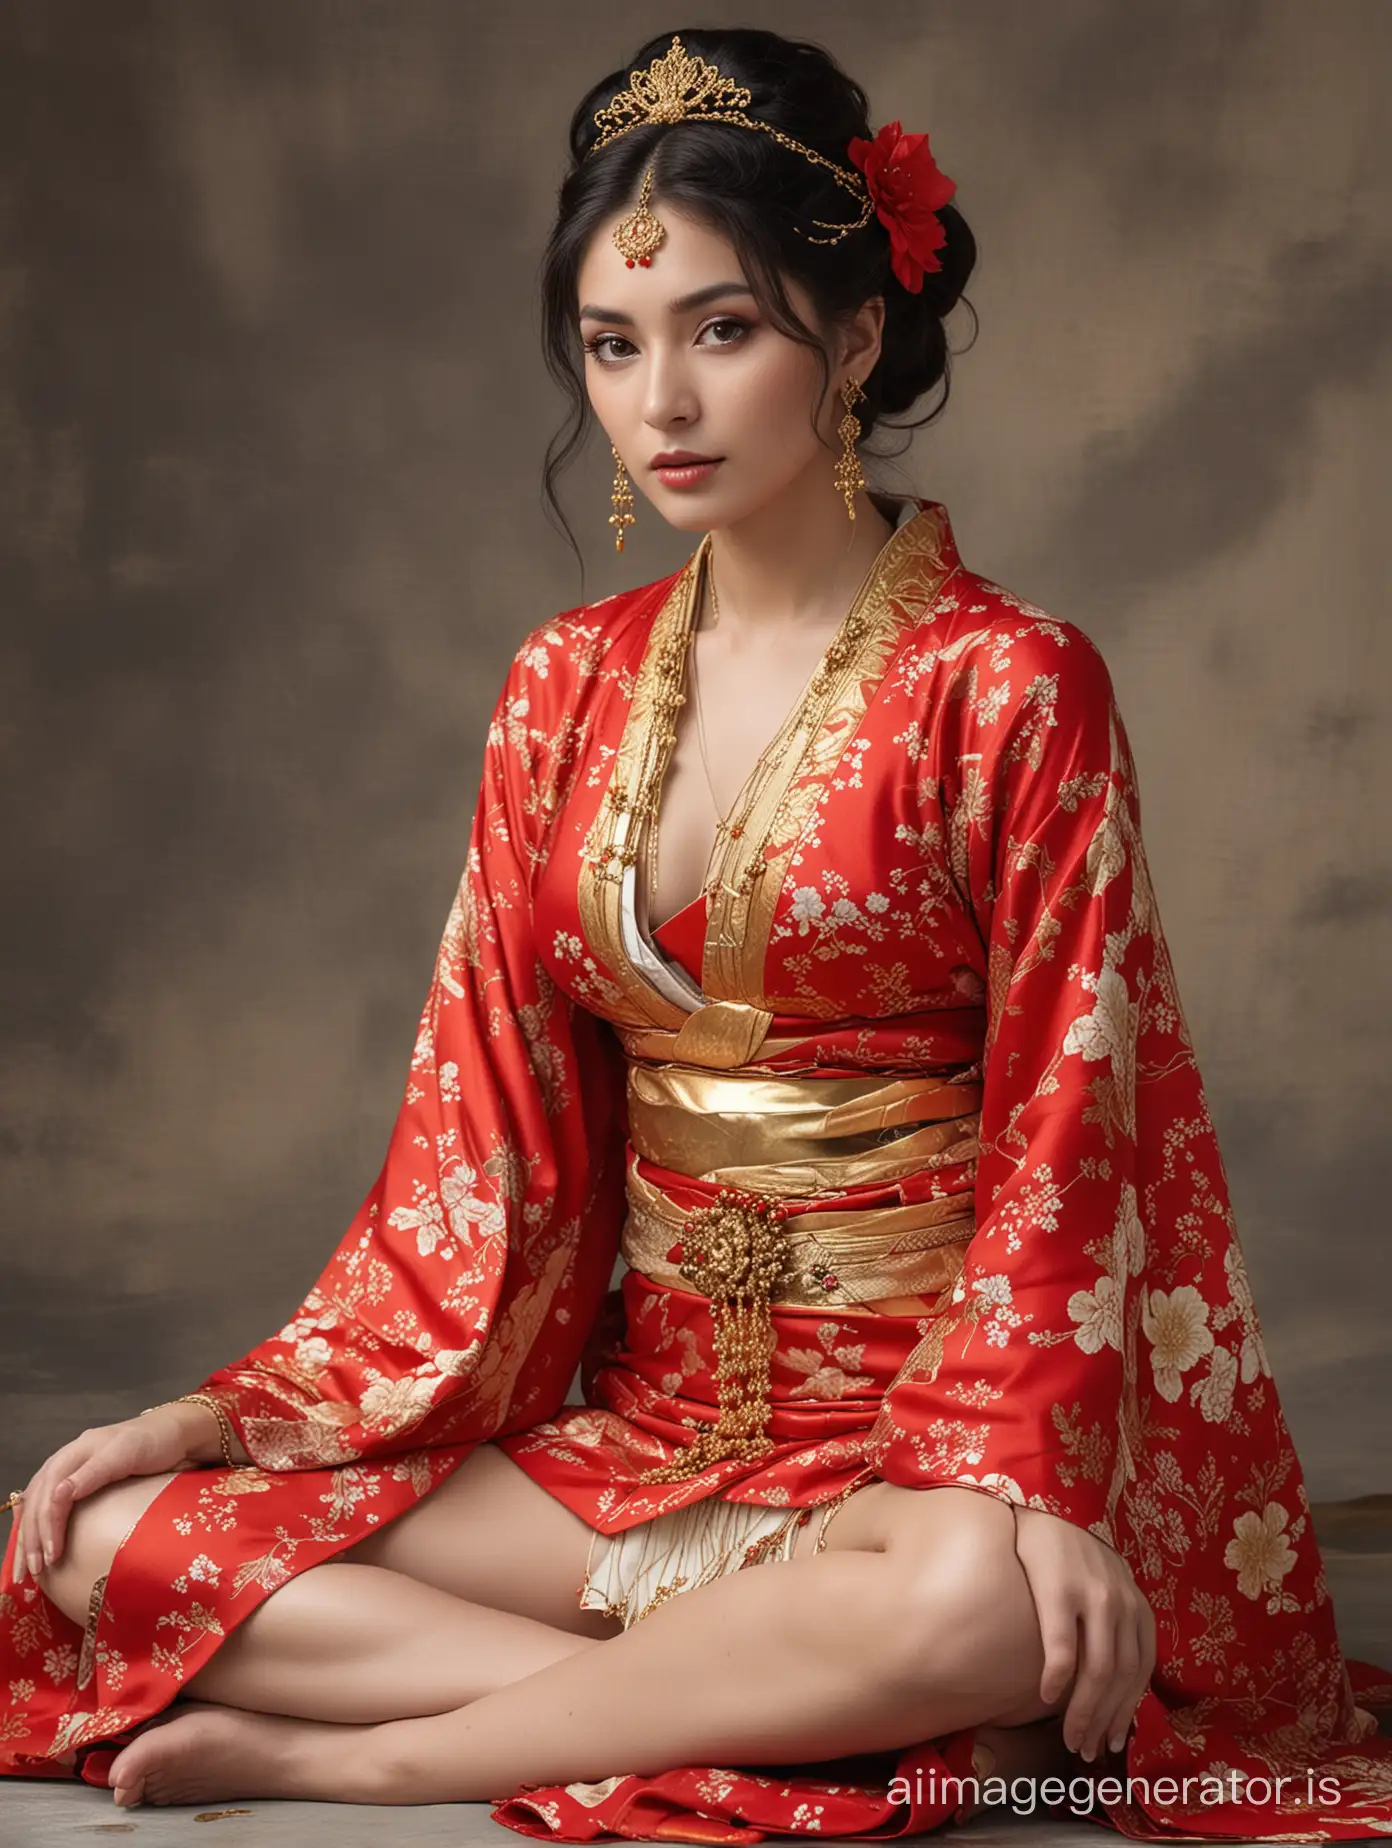 Seductive-Goddess-Shakti-in-Red-Kimono-and-Gold-Jewelry